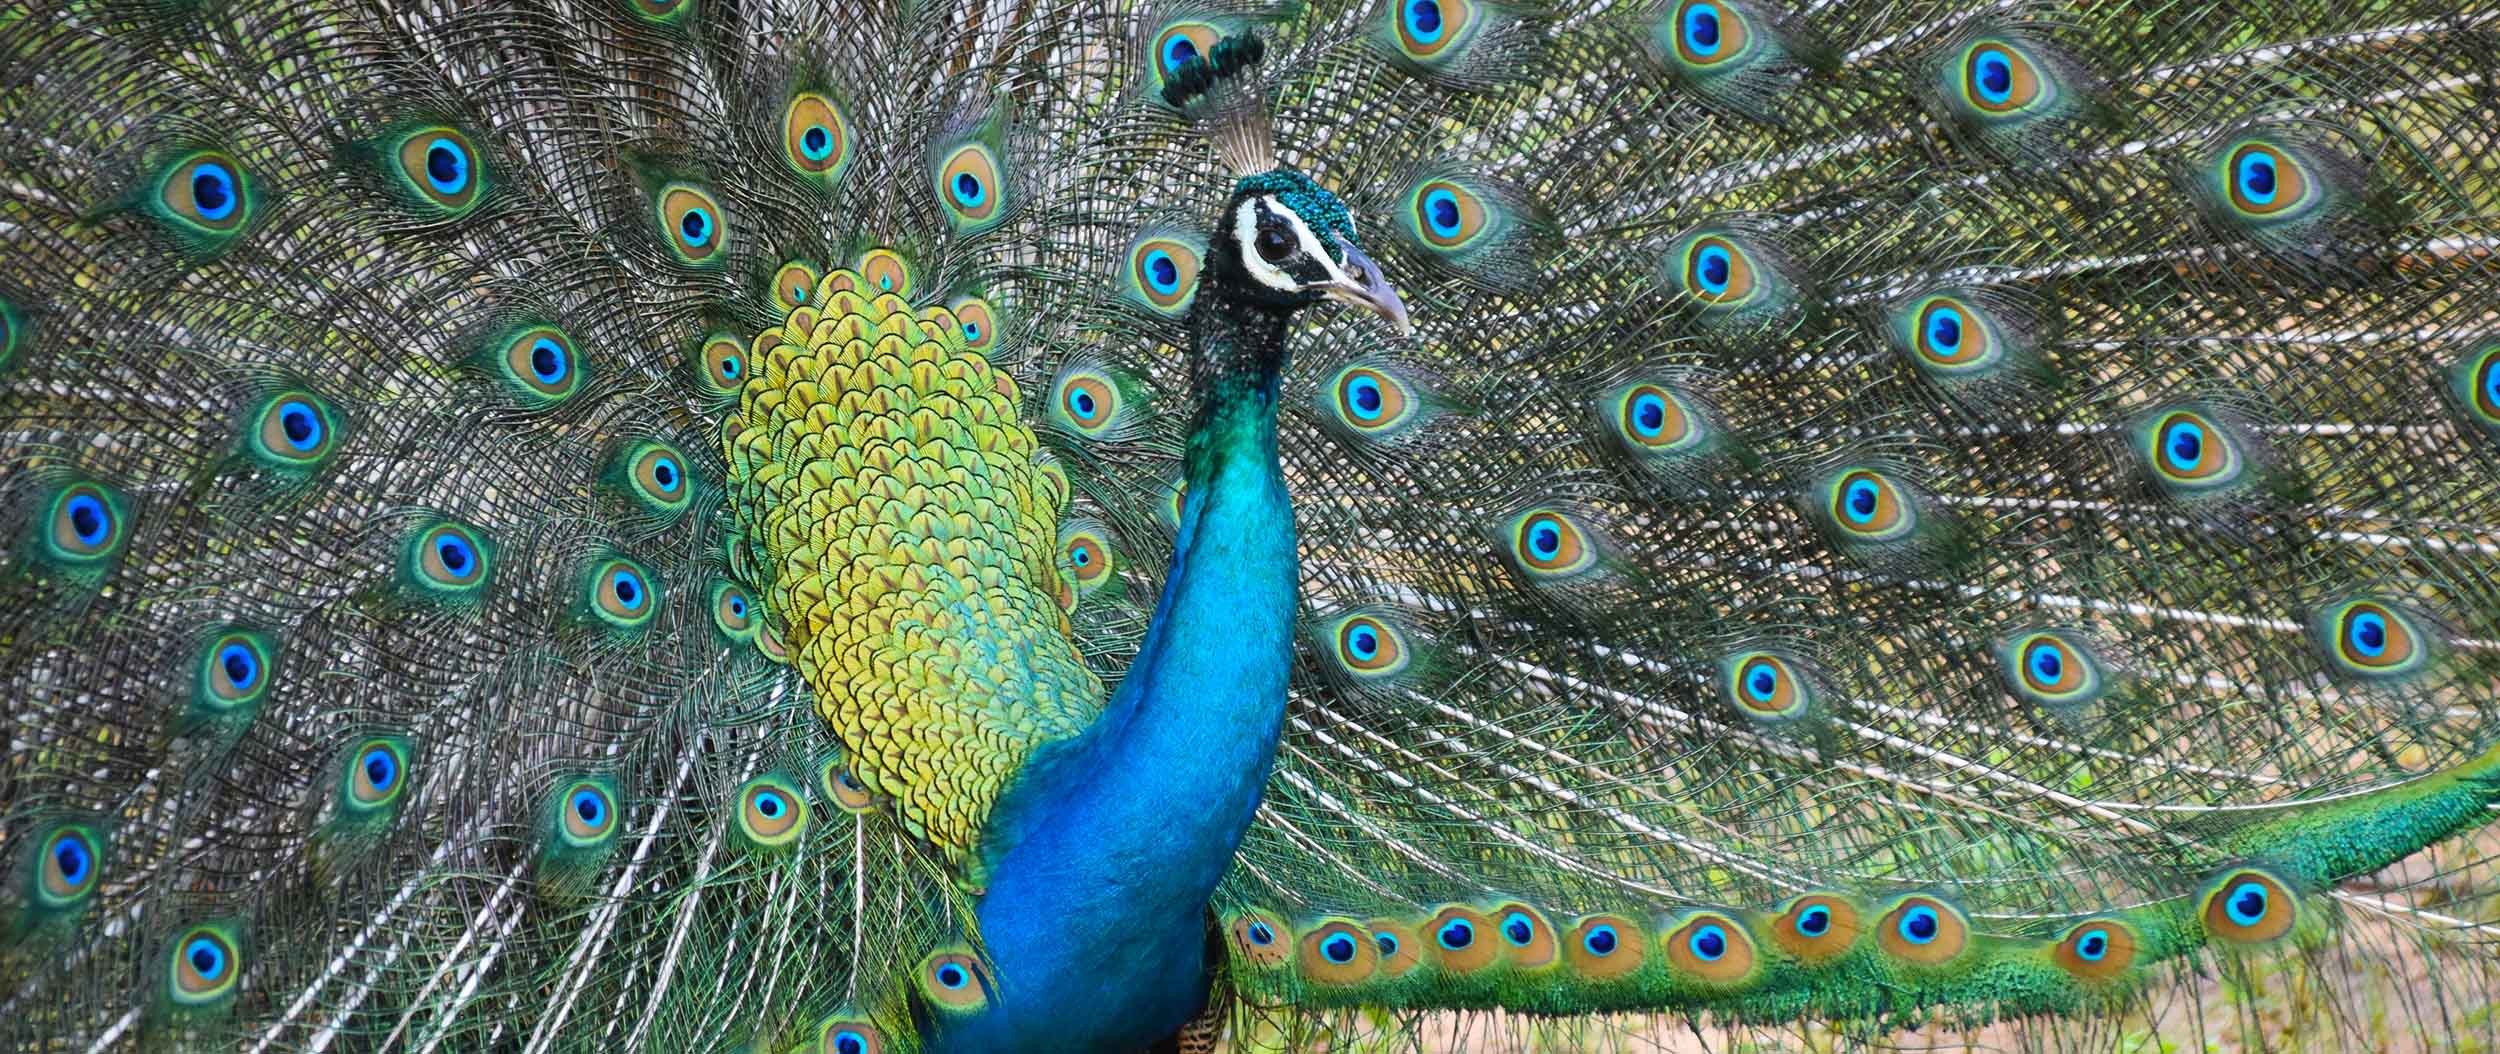 sri lanka peacock